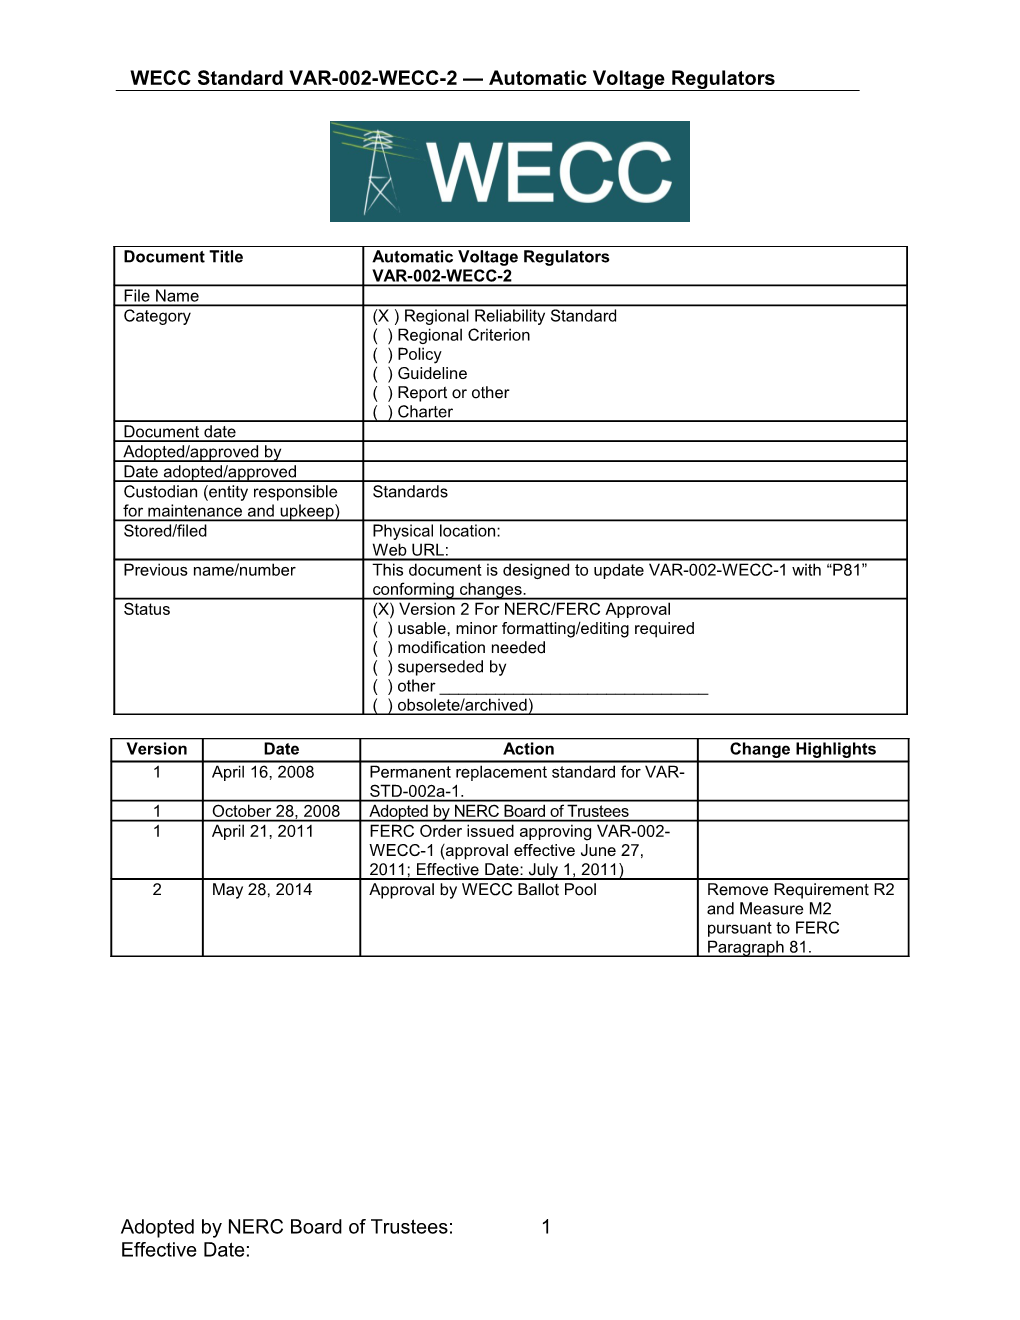 WECC-0105 VAR-002-WECC-2 Automatic Voltage Regulators P81 Clean